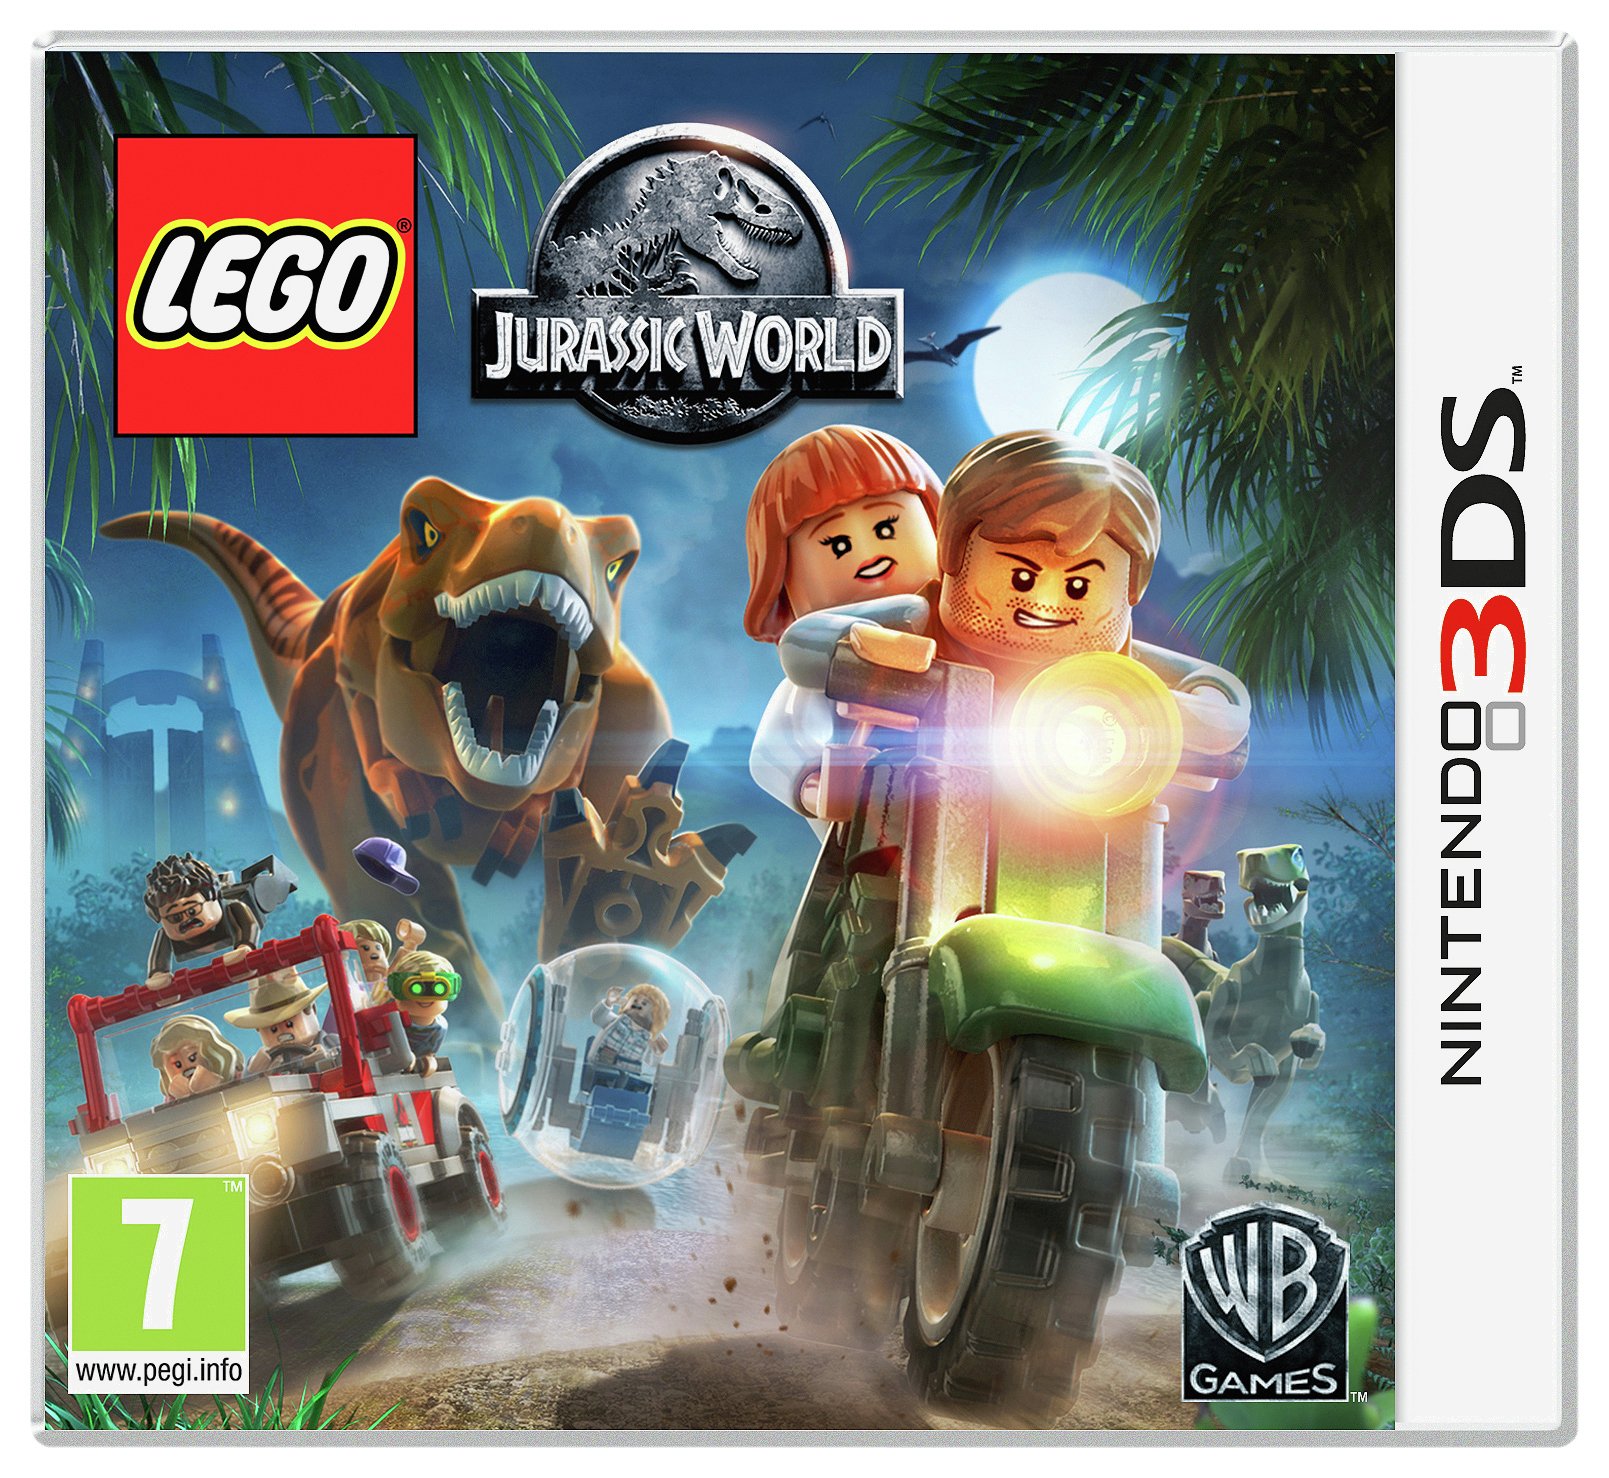 LEGO Jurassic World 3DS Game